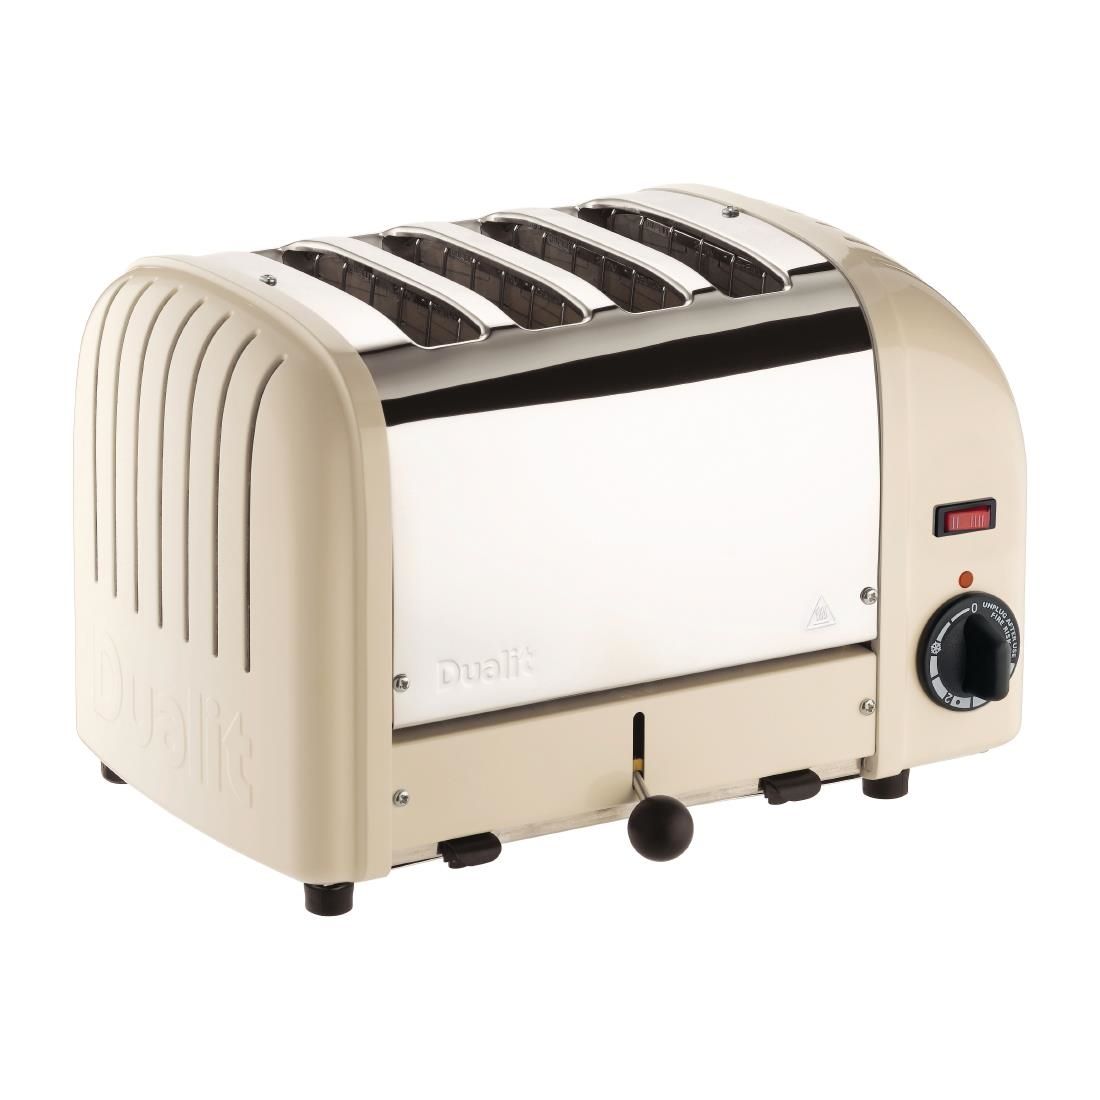 Dualit 4 Slice Vario Toaster Utility Cream 40354 - CD331 Toasters Dualit   